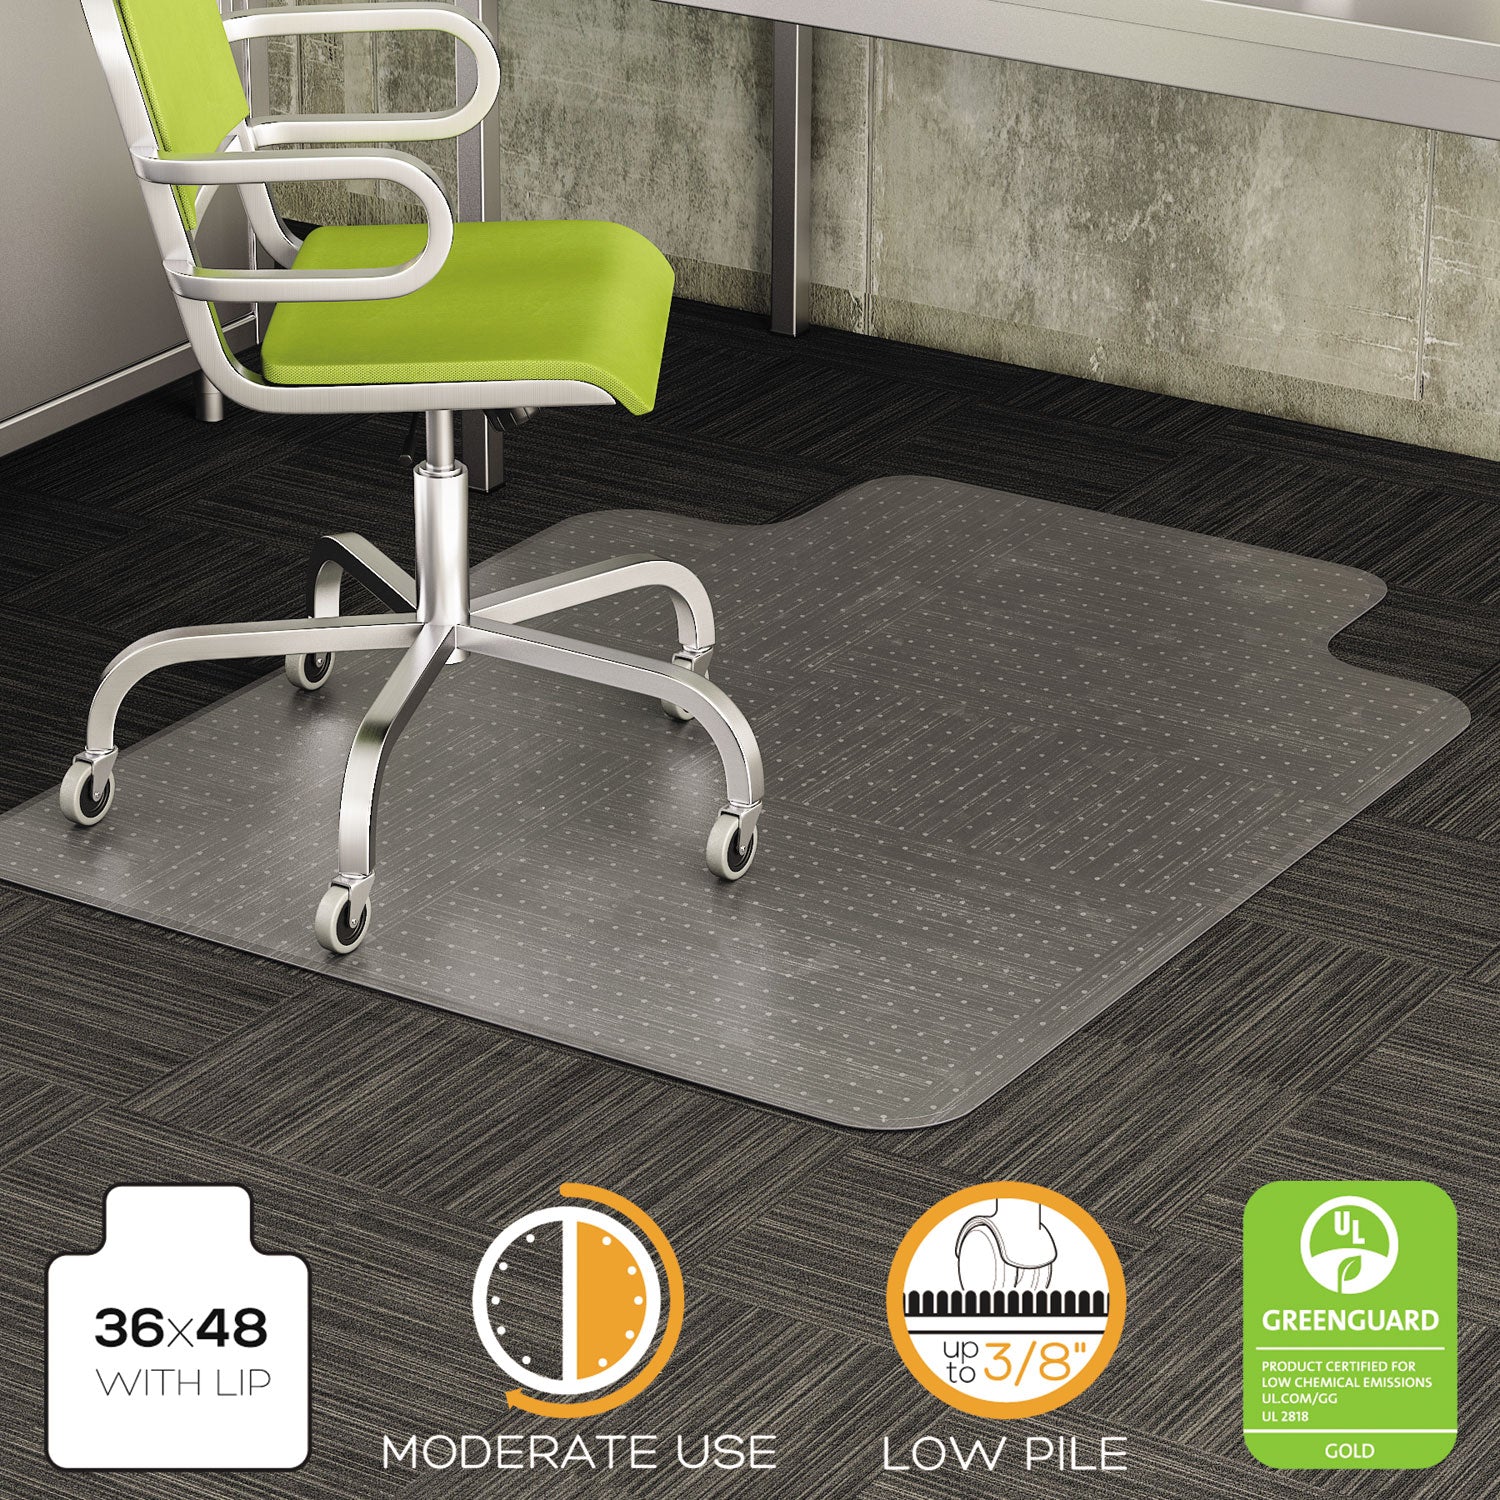 DuraMat Moderate Use Chair Mat, Low Pile Carpet, Flat, 36 x 48, Lipped, Clear - 